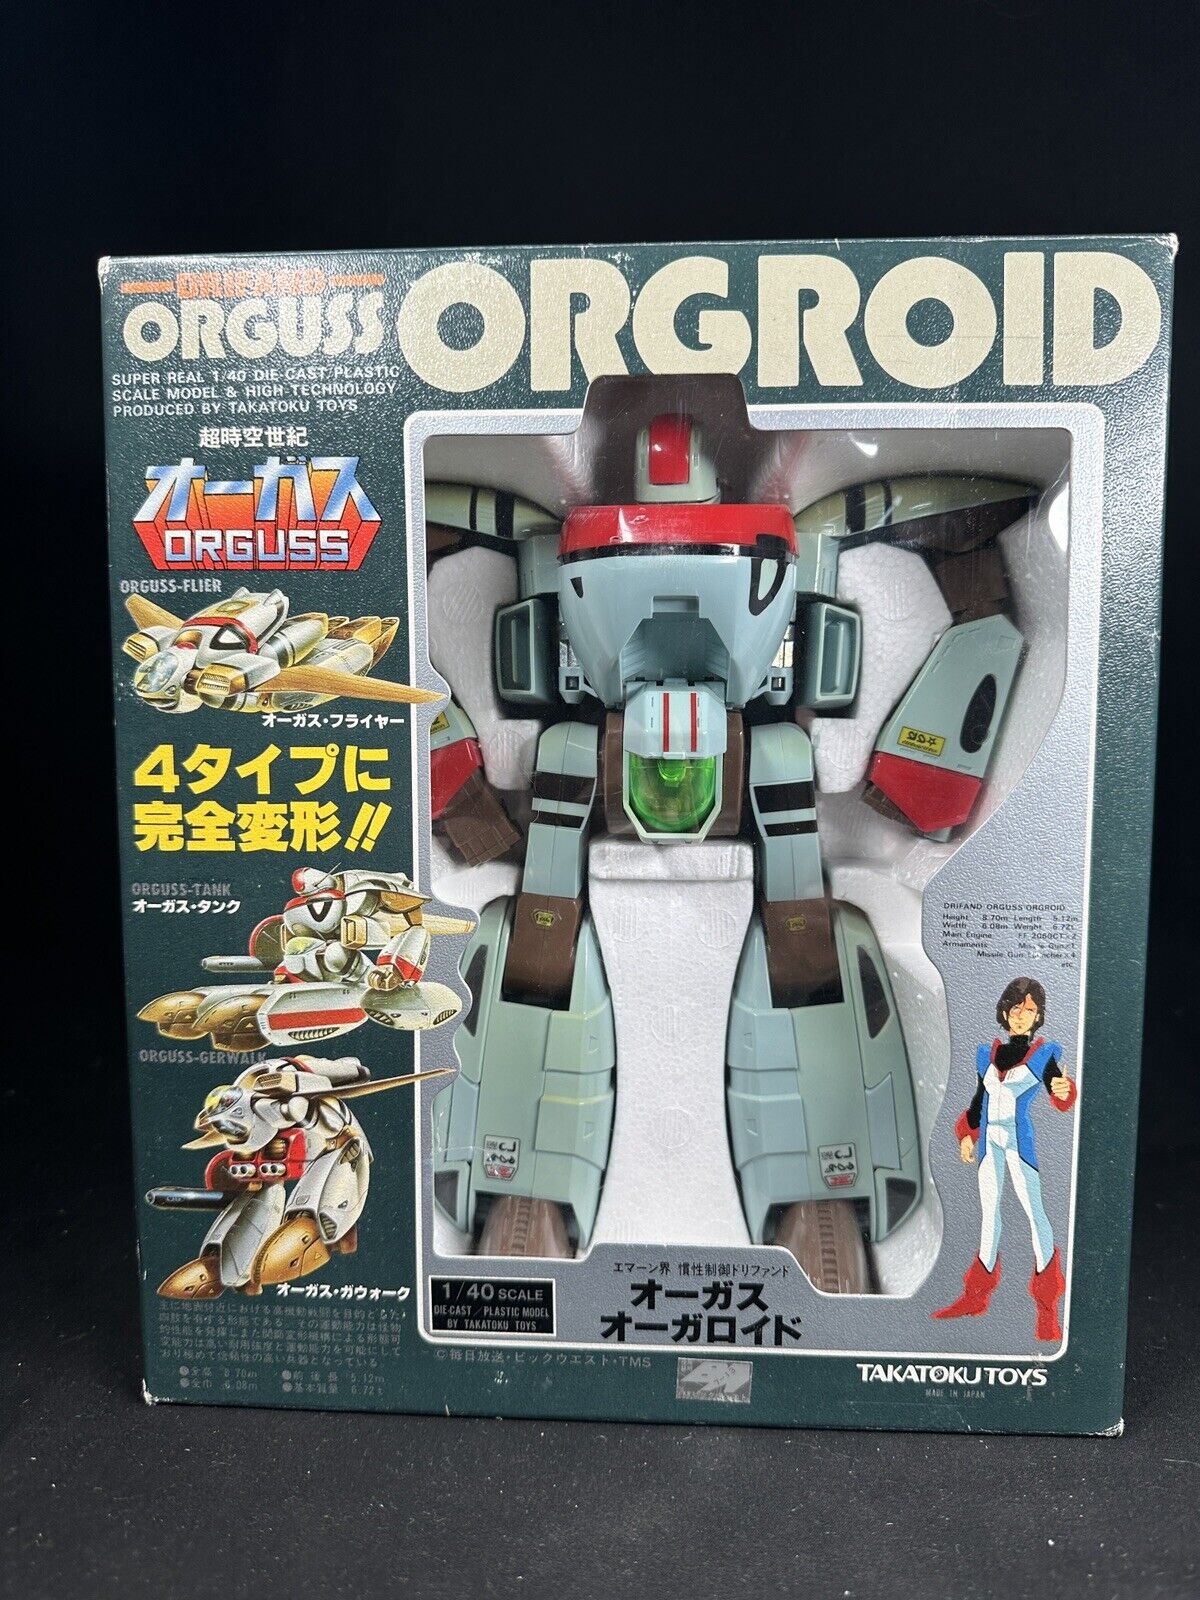 Drifand Orguss OGROID Macross Robotech 1/40 scale Diecast Takatoku Toys Figure